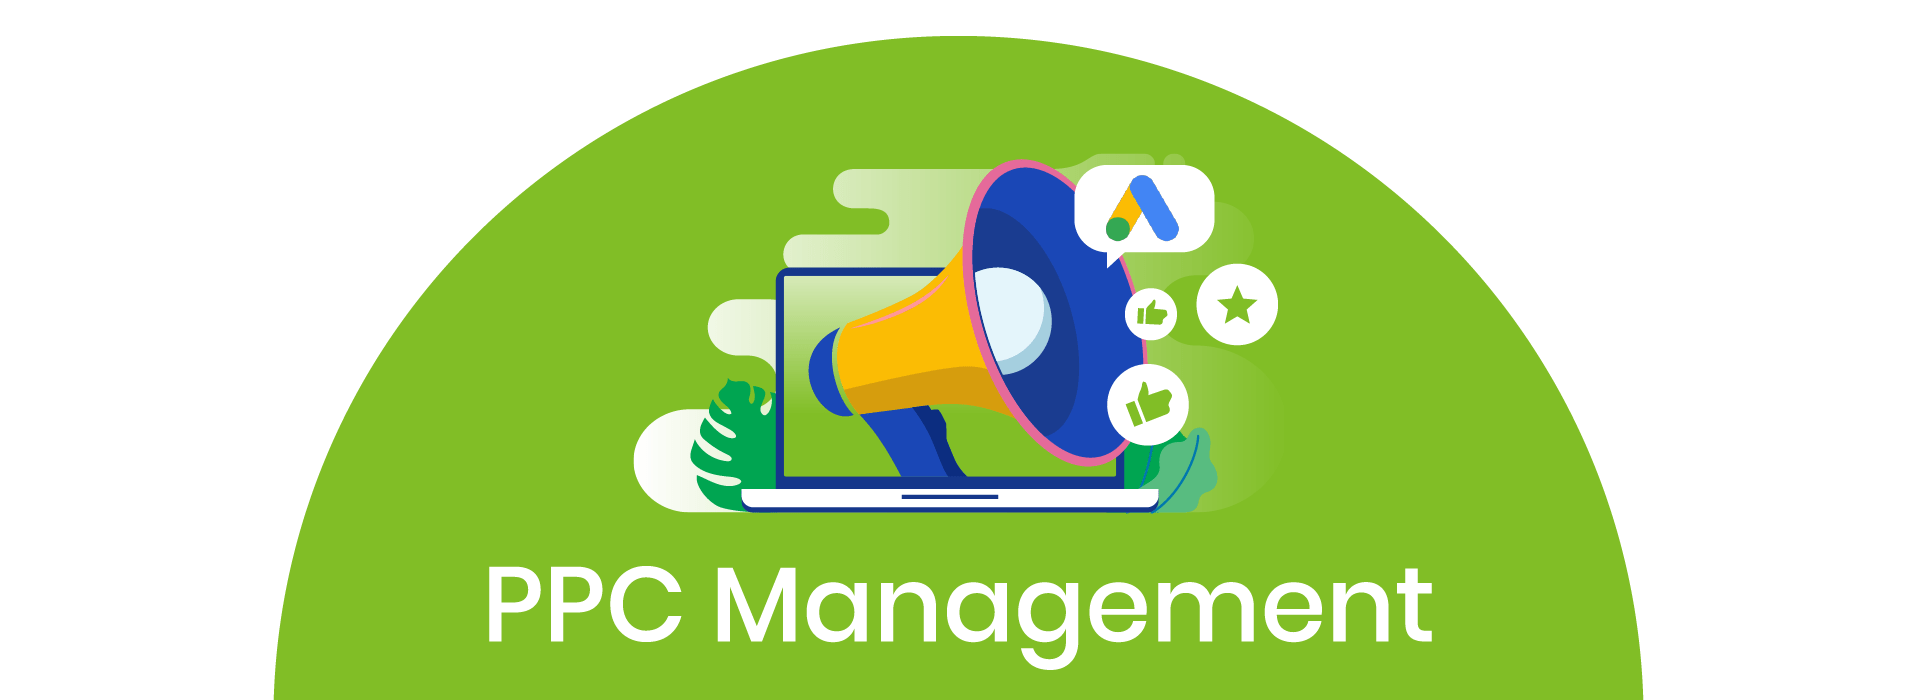 PPC management-01